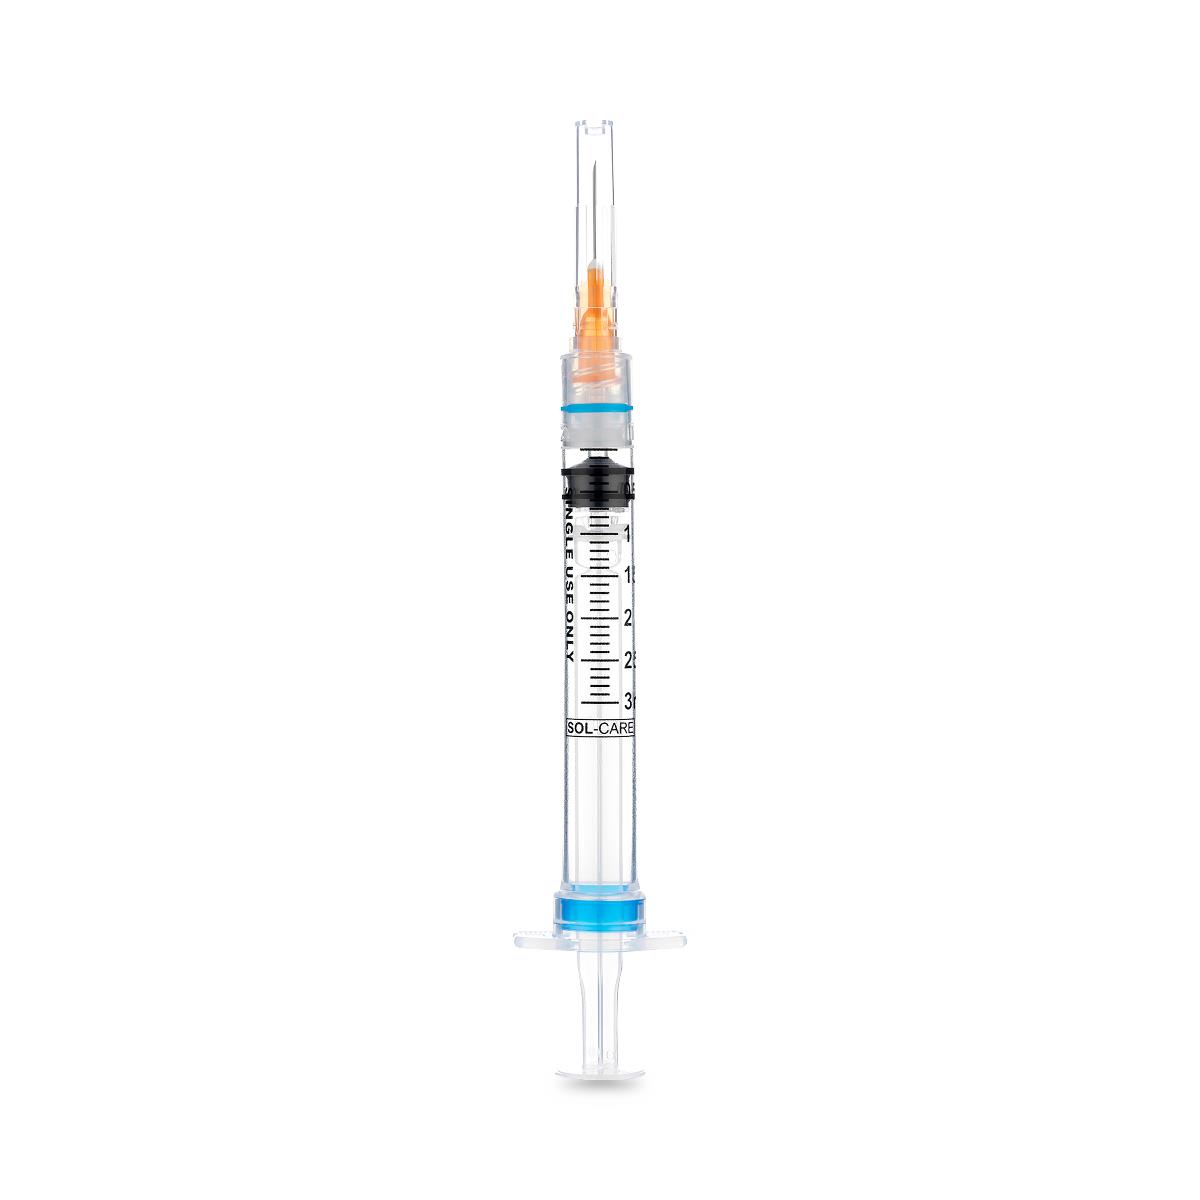 Medline Luer Lock Syringe 3mL 800 cs - Medex Supply